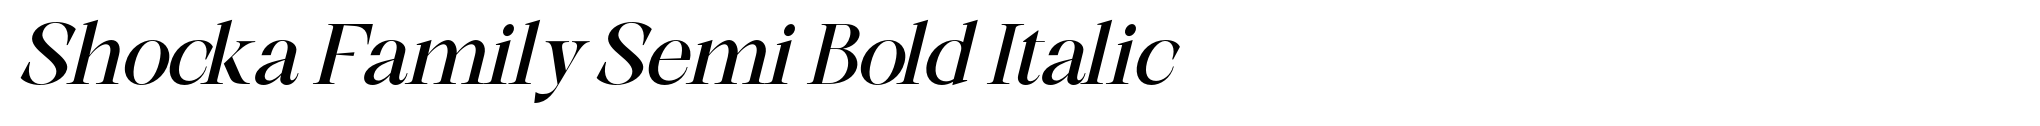 Shocka Family Semi Bold Italic image